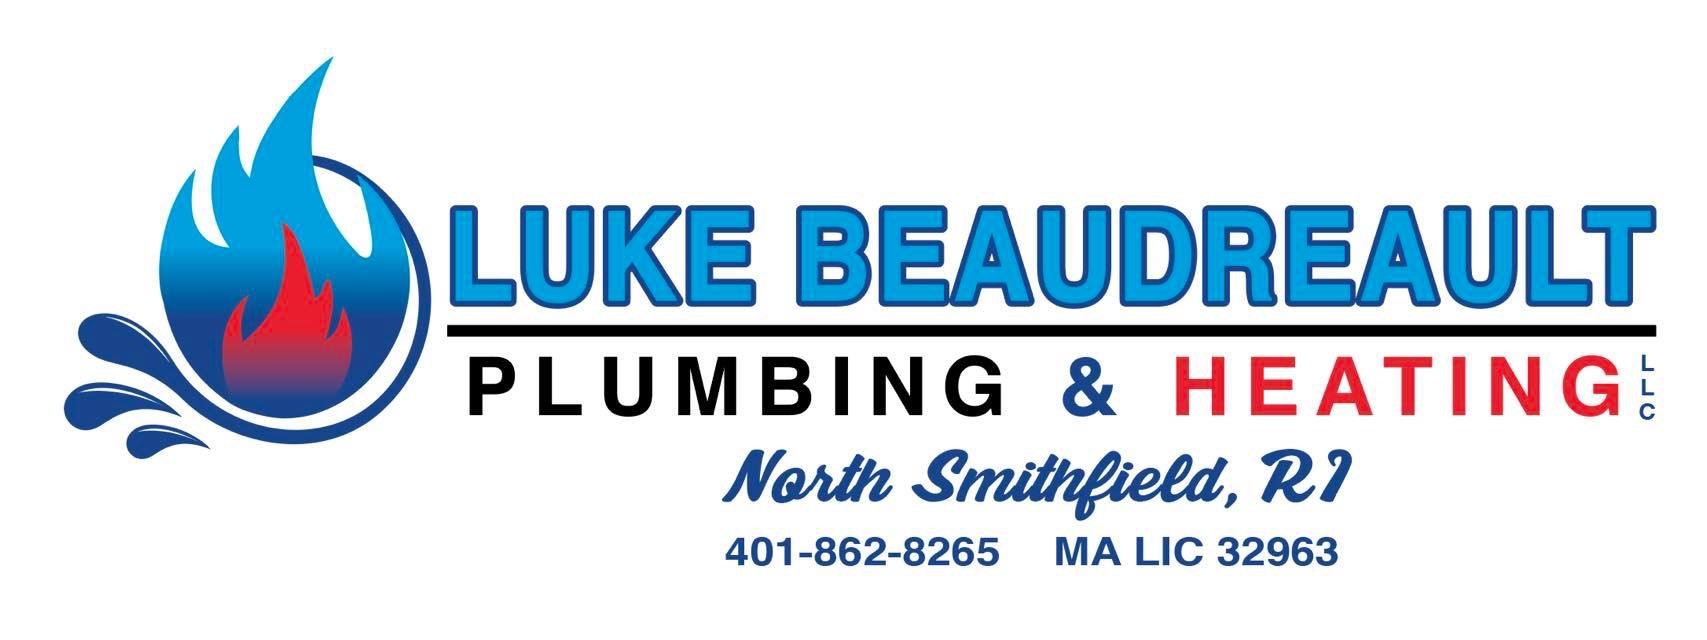 Luke Beaudreault Plumbing & Heating LLC